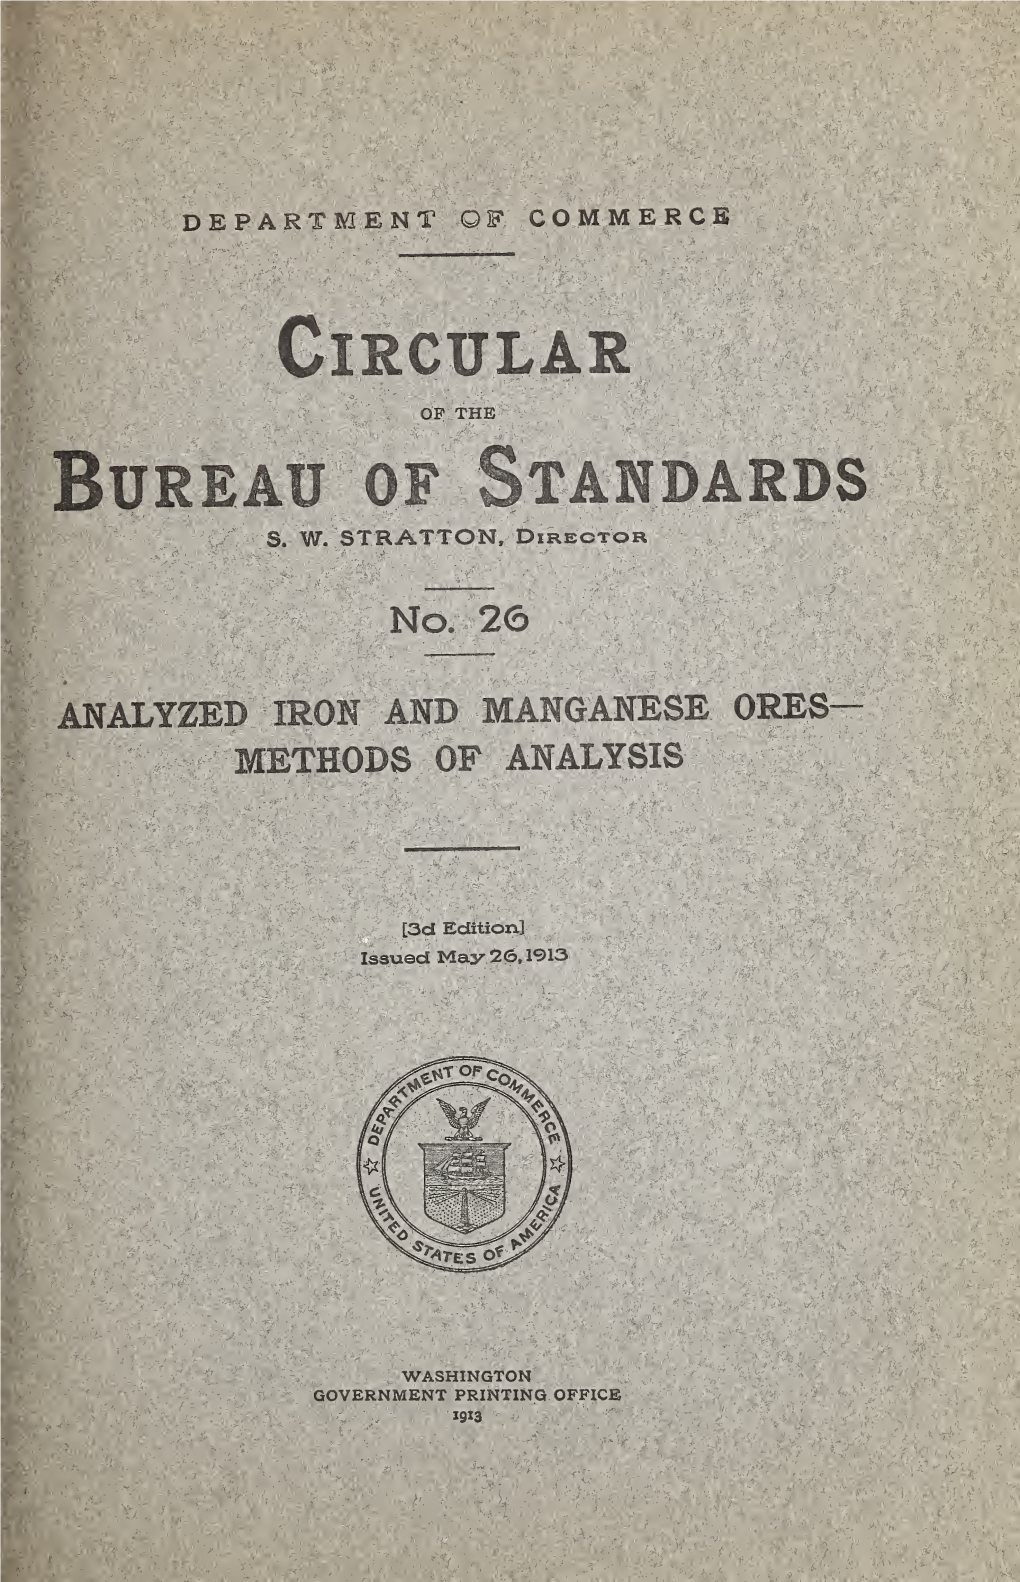 Circular of the Bureau of Standards No. 26 3Rd Edition: Analyzed Iron